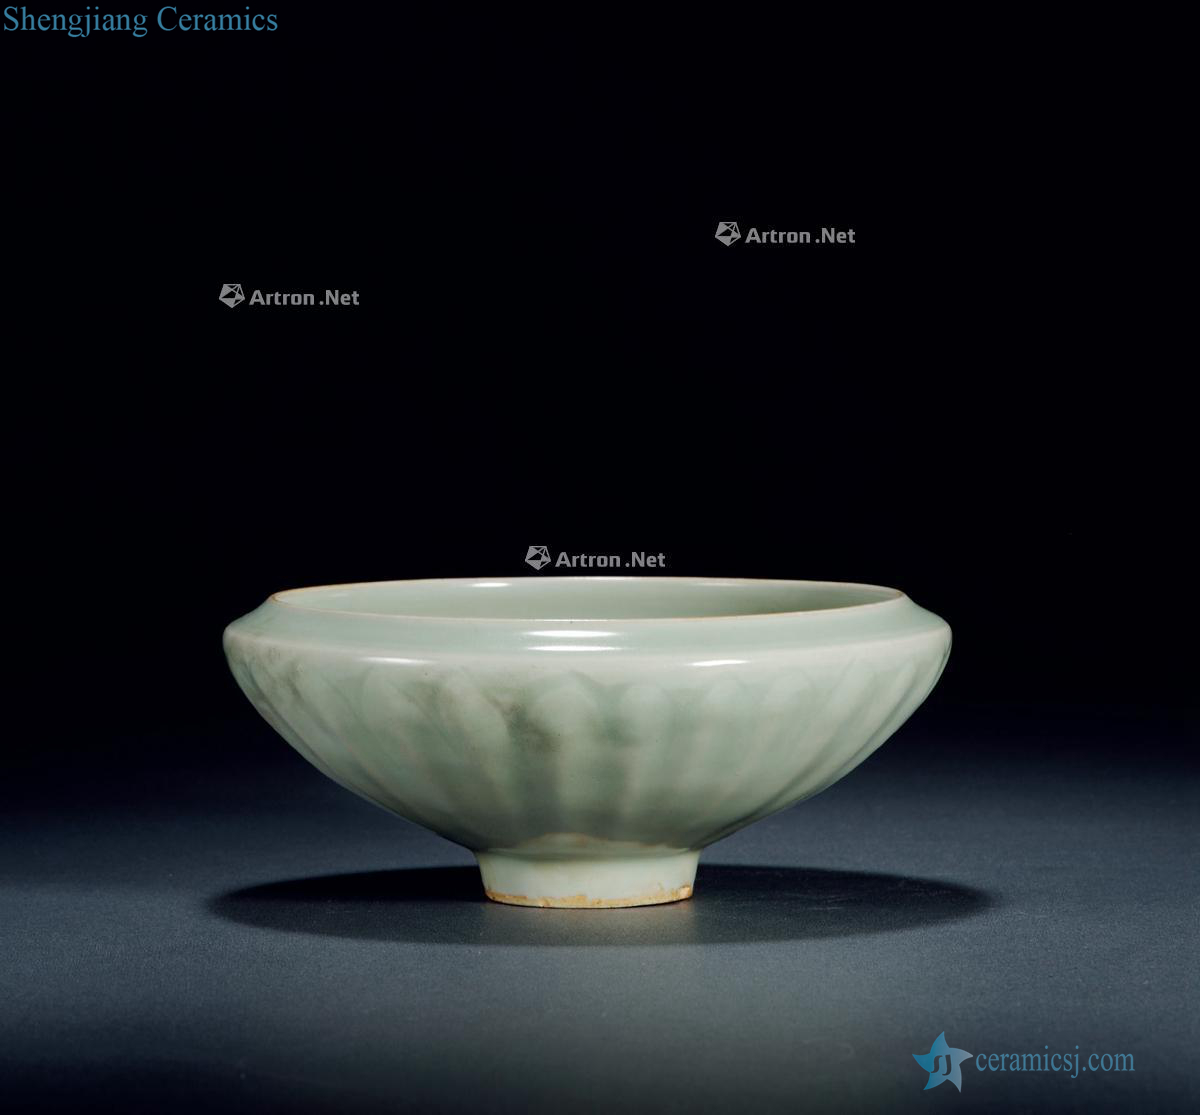 The southern song dynasty, longquan celadon powder blue glaze lotus-shaped bowl